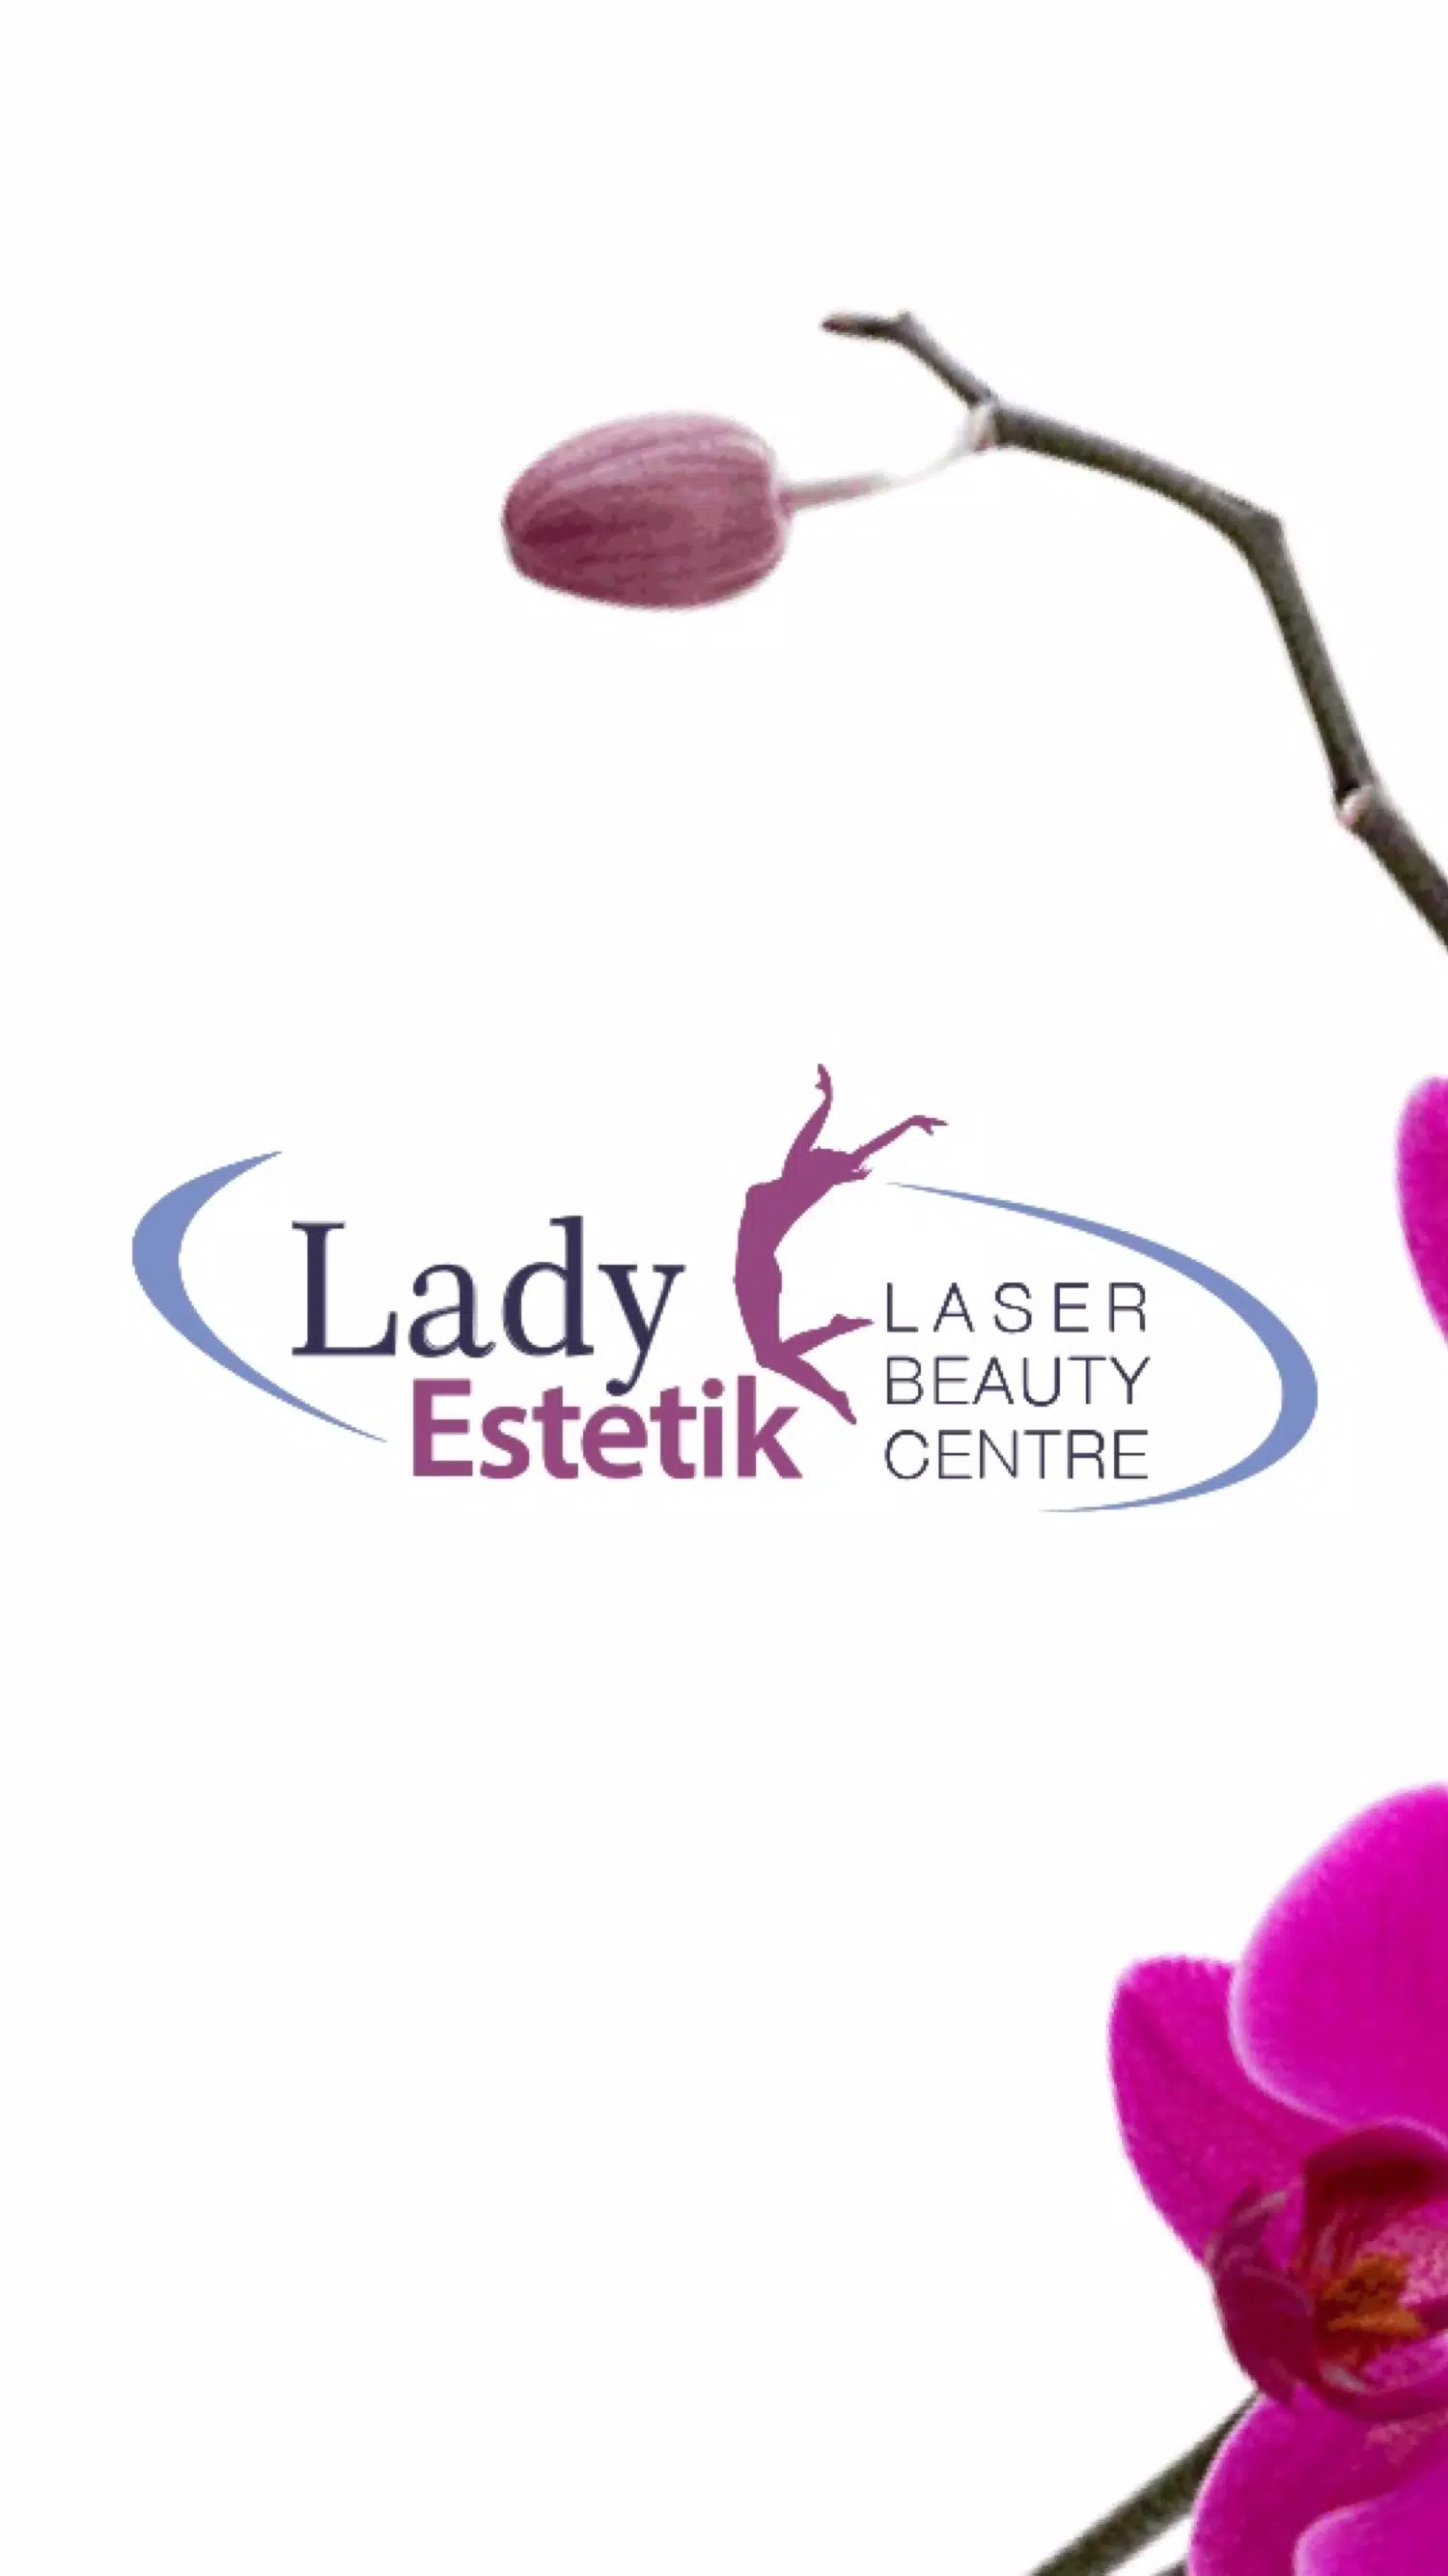 Lady Estetik - Laser Centre APK for Android Download